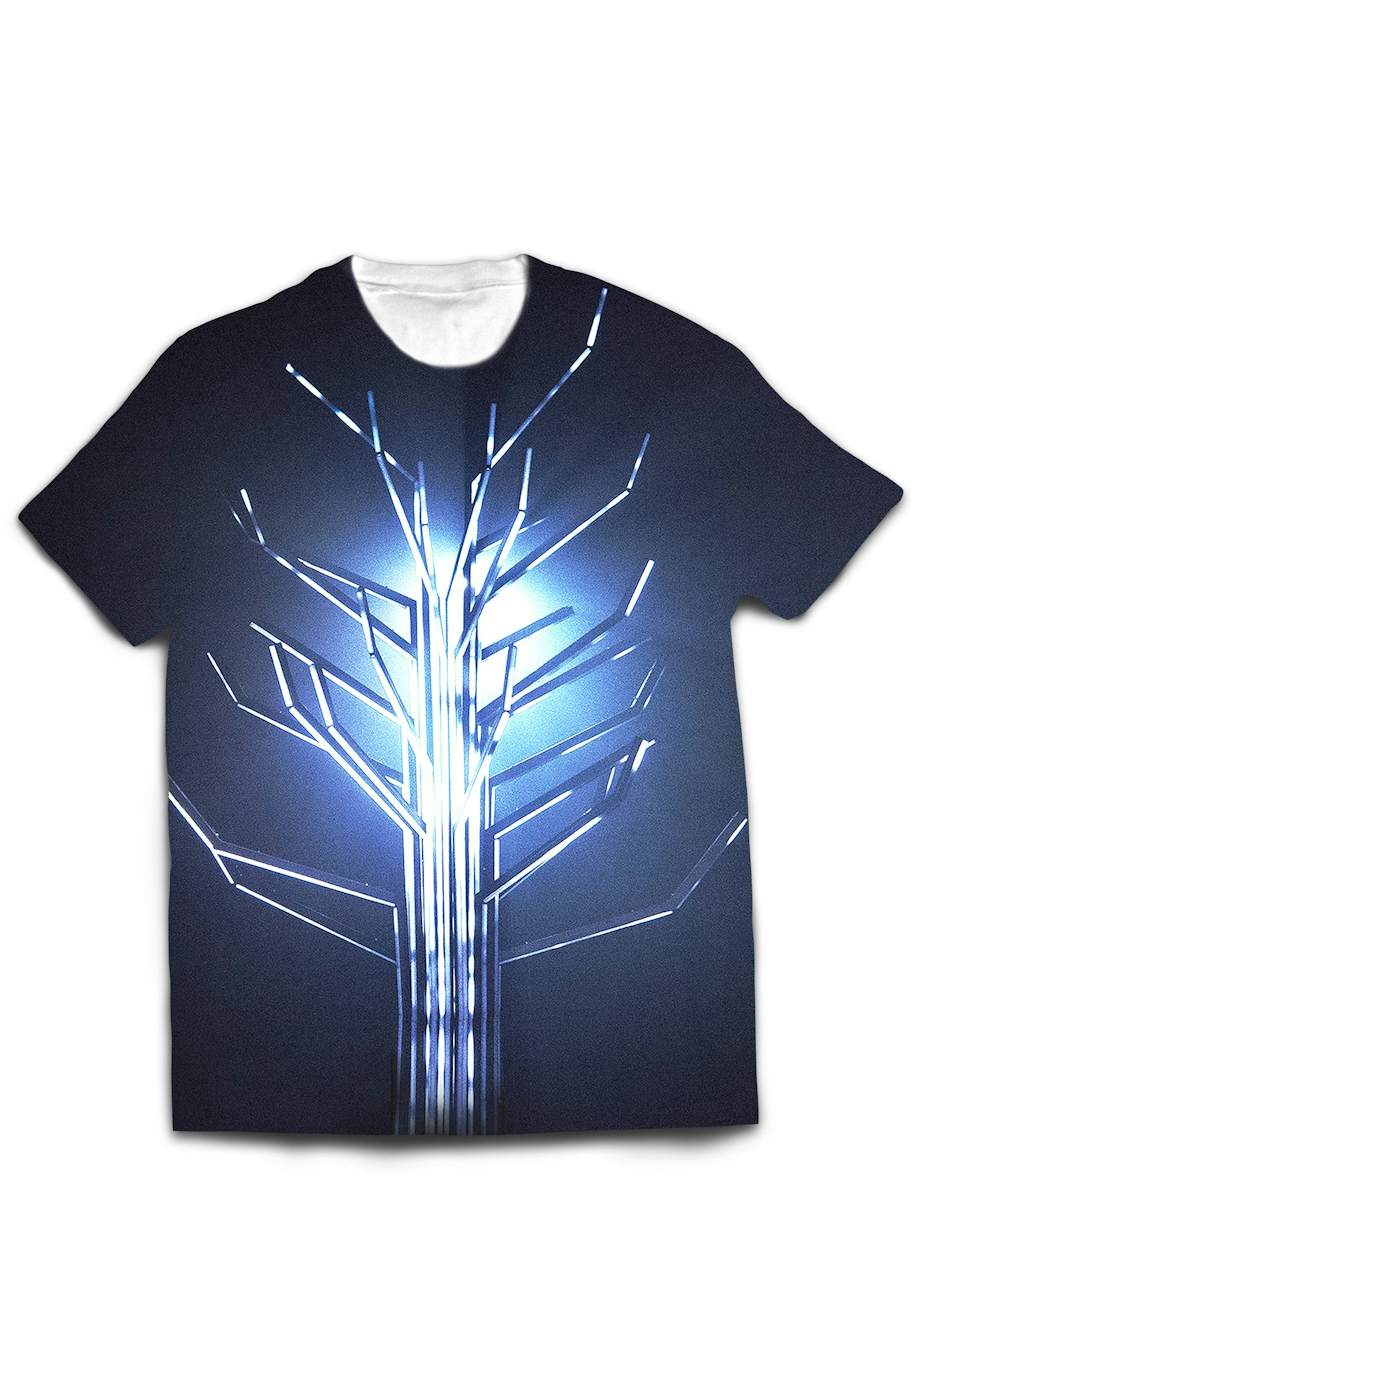 RIOPY Tree of Light (T-shirt)